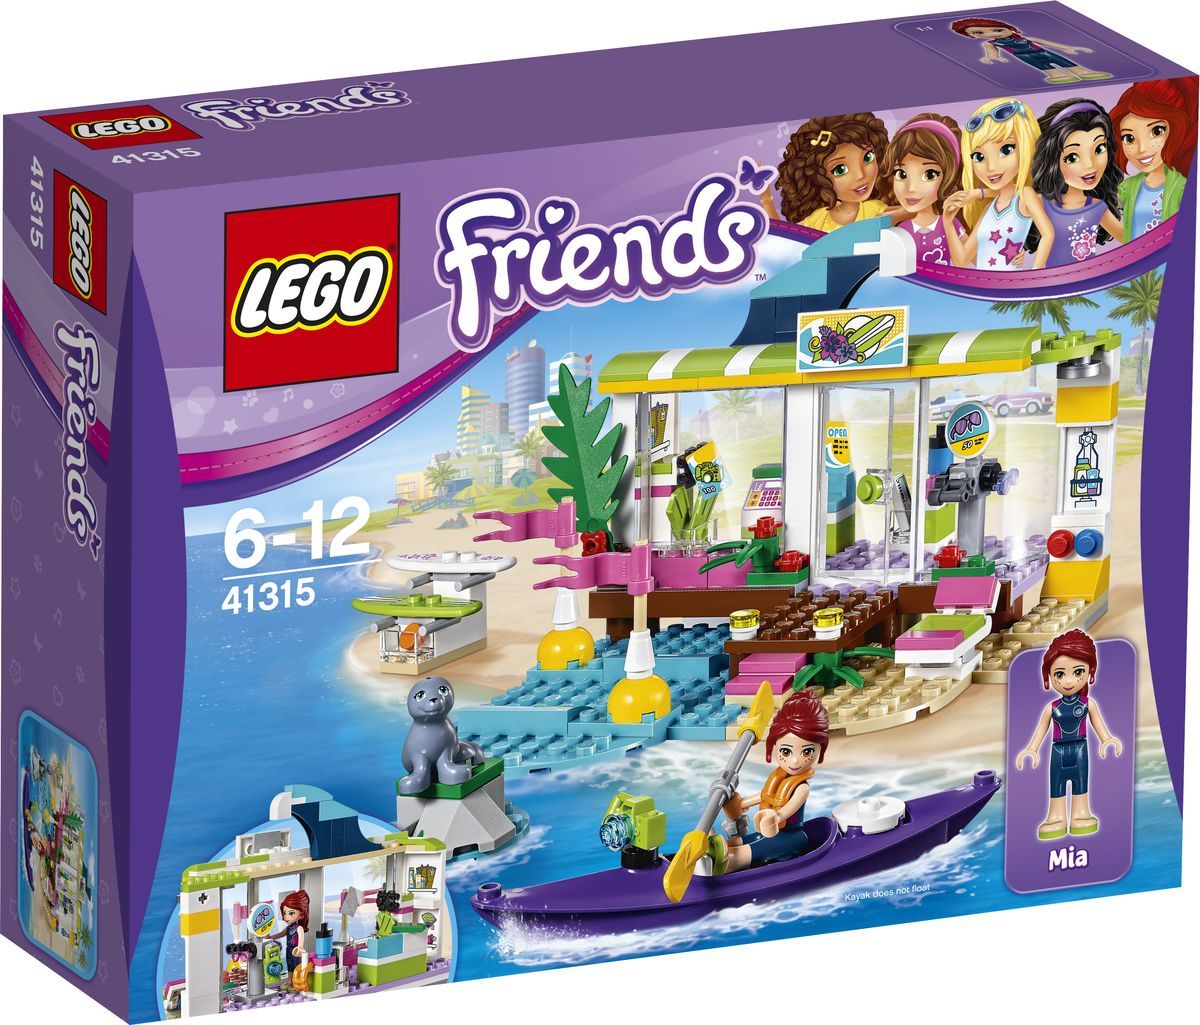 LEGO Friends 41315 - 